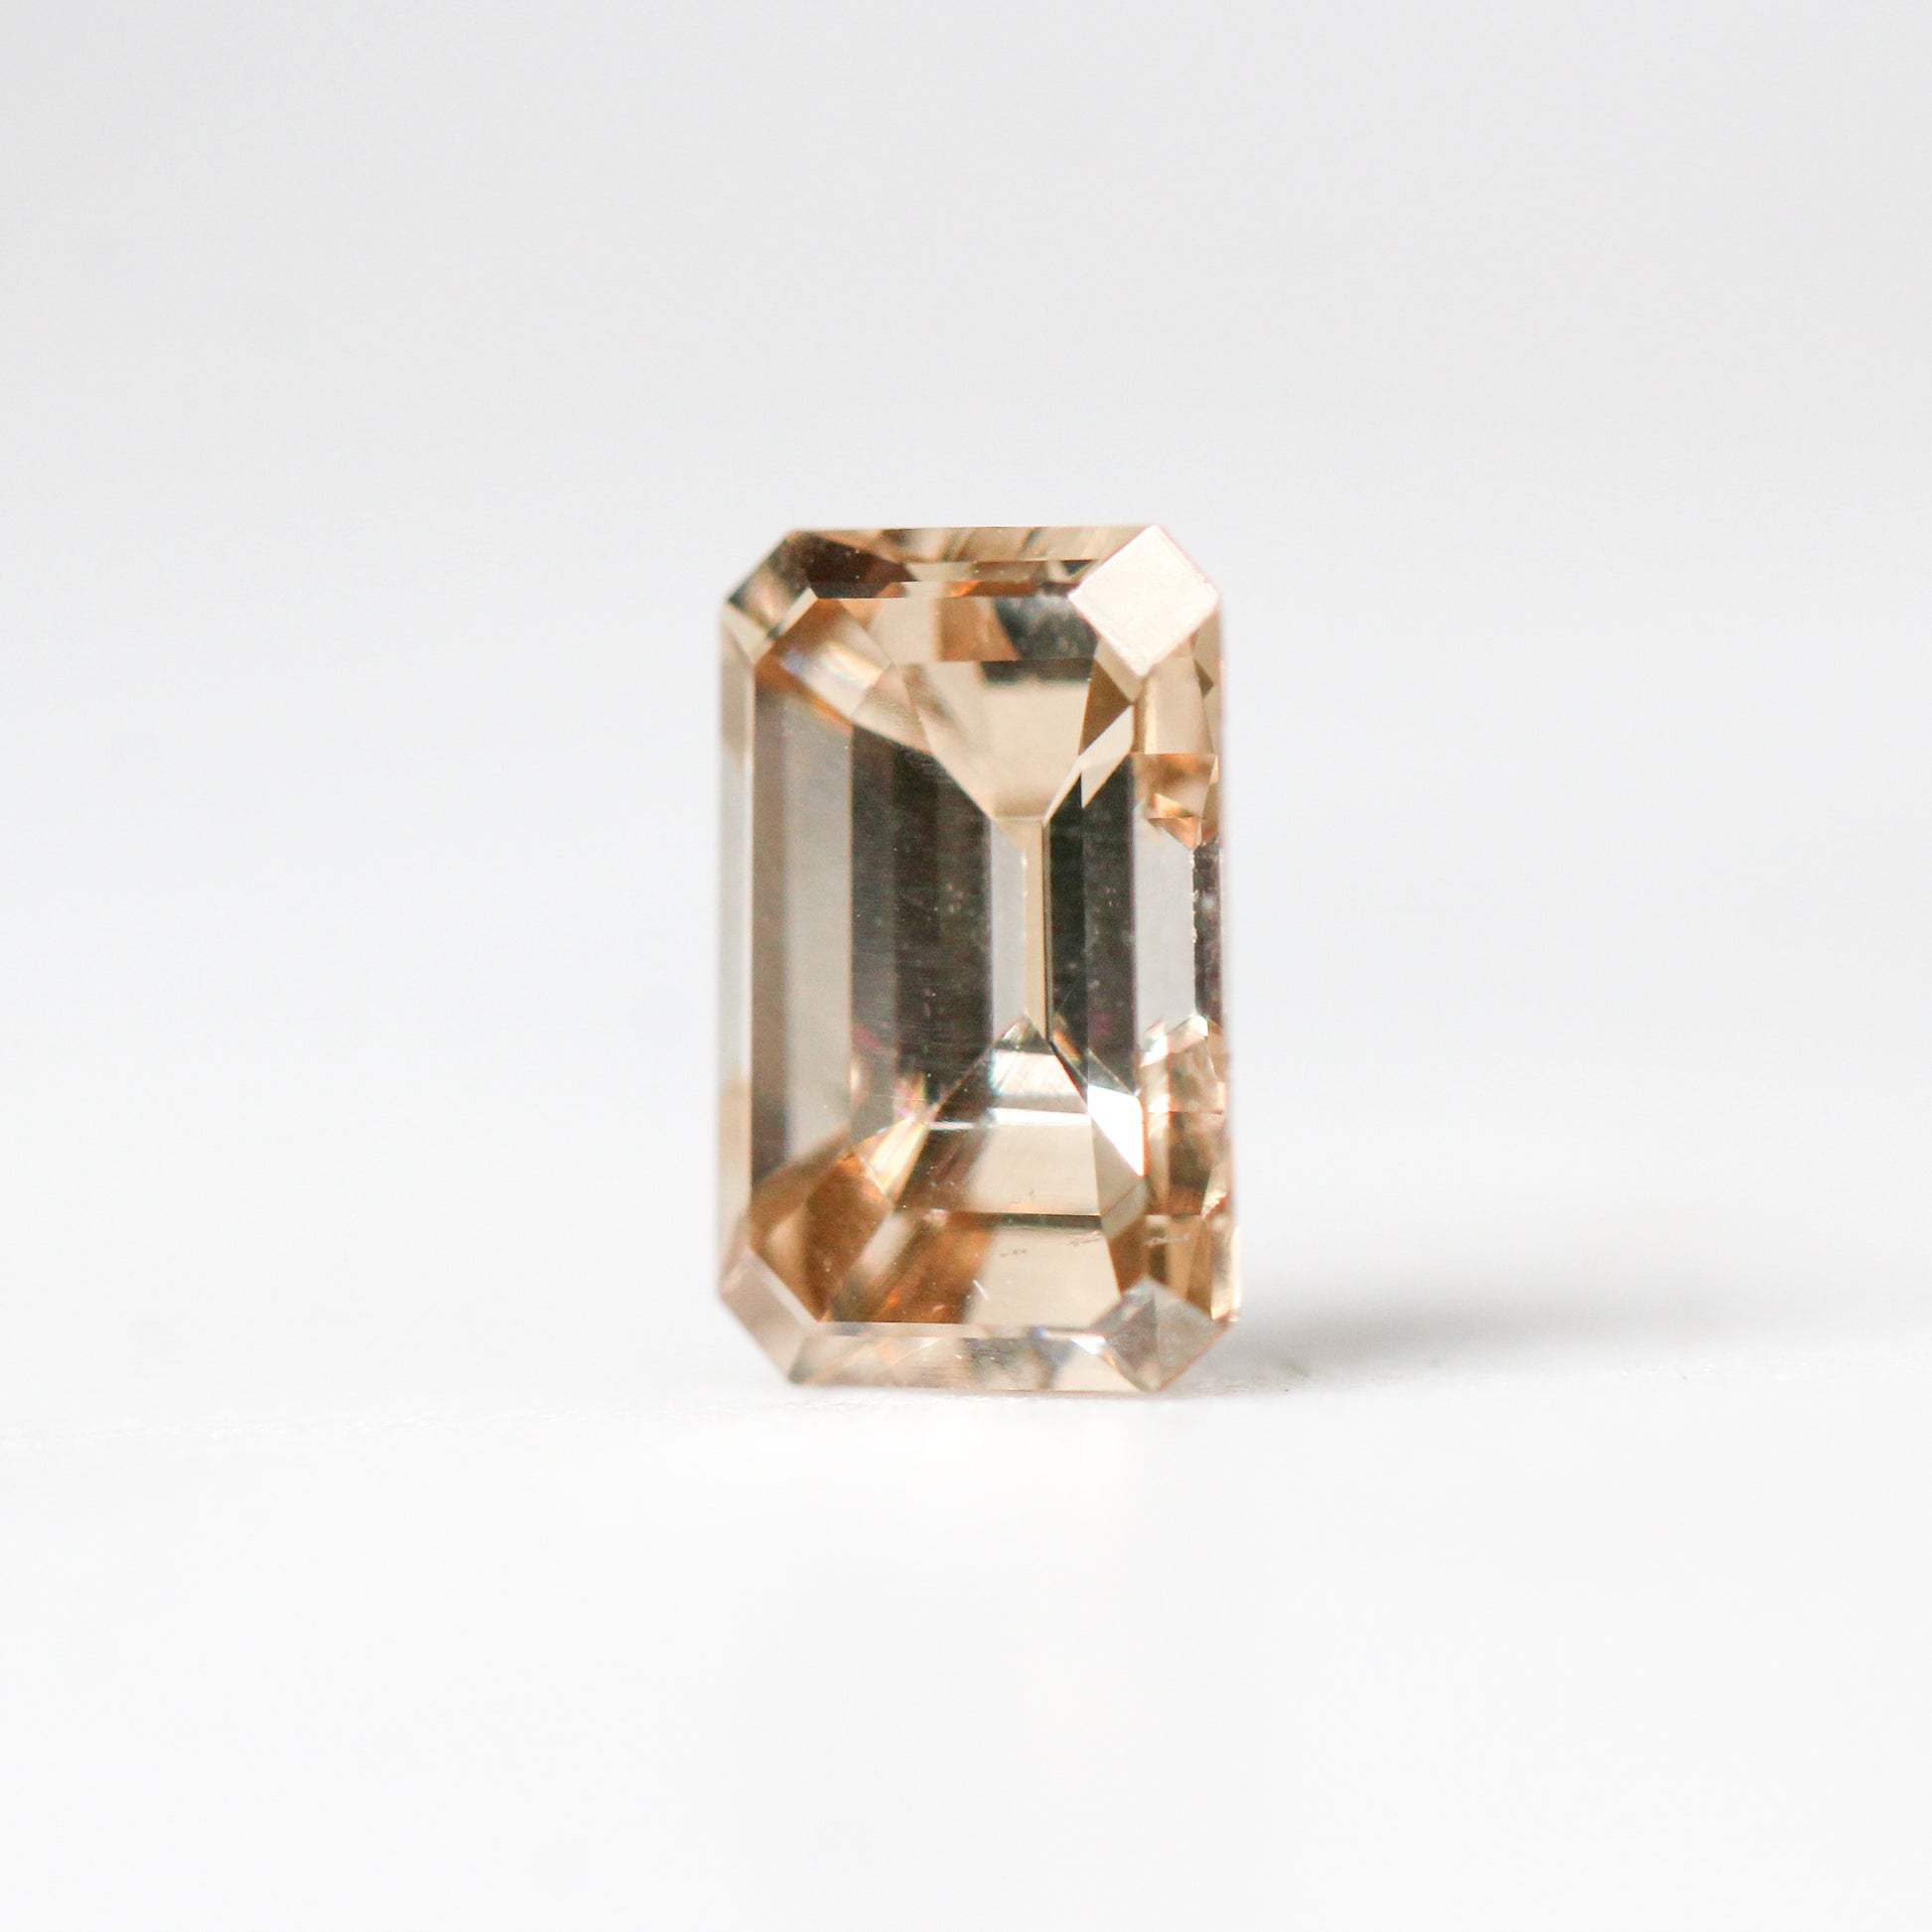 1.11 Carat IGL Certified Emerald Cut VVS2 Champagne Diamond for Custom Work - Inventory Code ECC111 - Midwinter Co. Alternative Bridal Rings and Modern Fine Jewelry